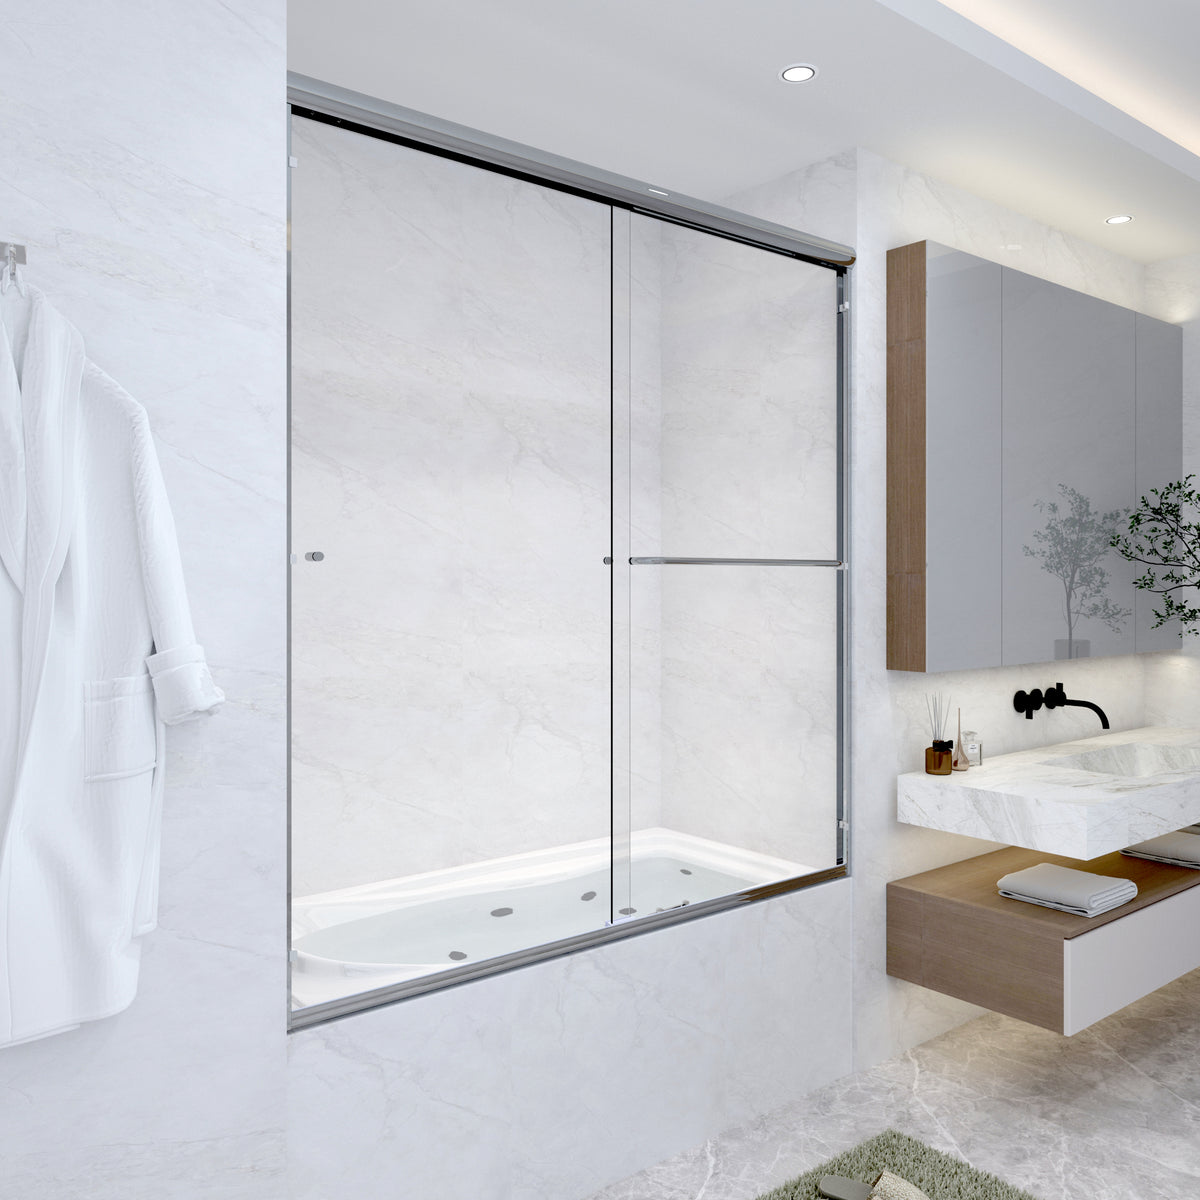 SL4U Bathroom Polished Chrome Framed Bathtub Double Sliding Shower Door, 60" W x 62" H  Door.